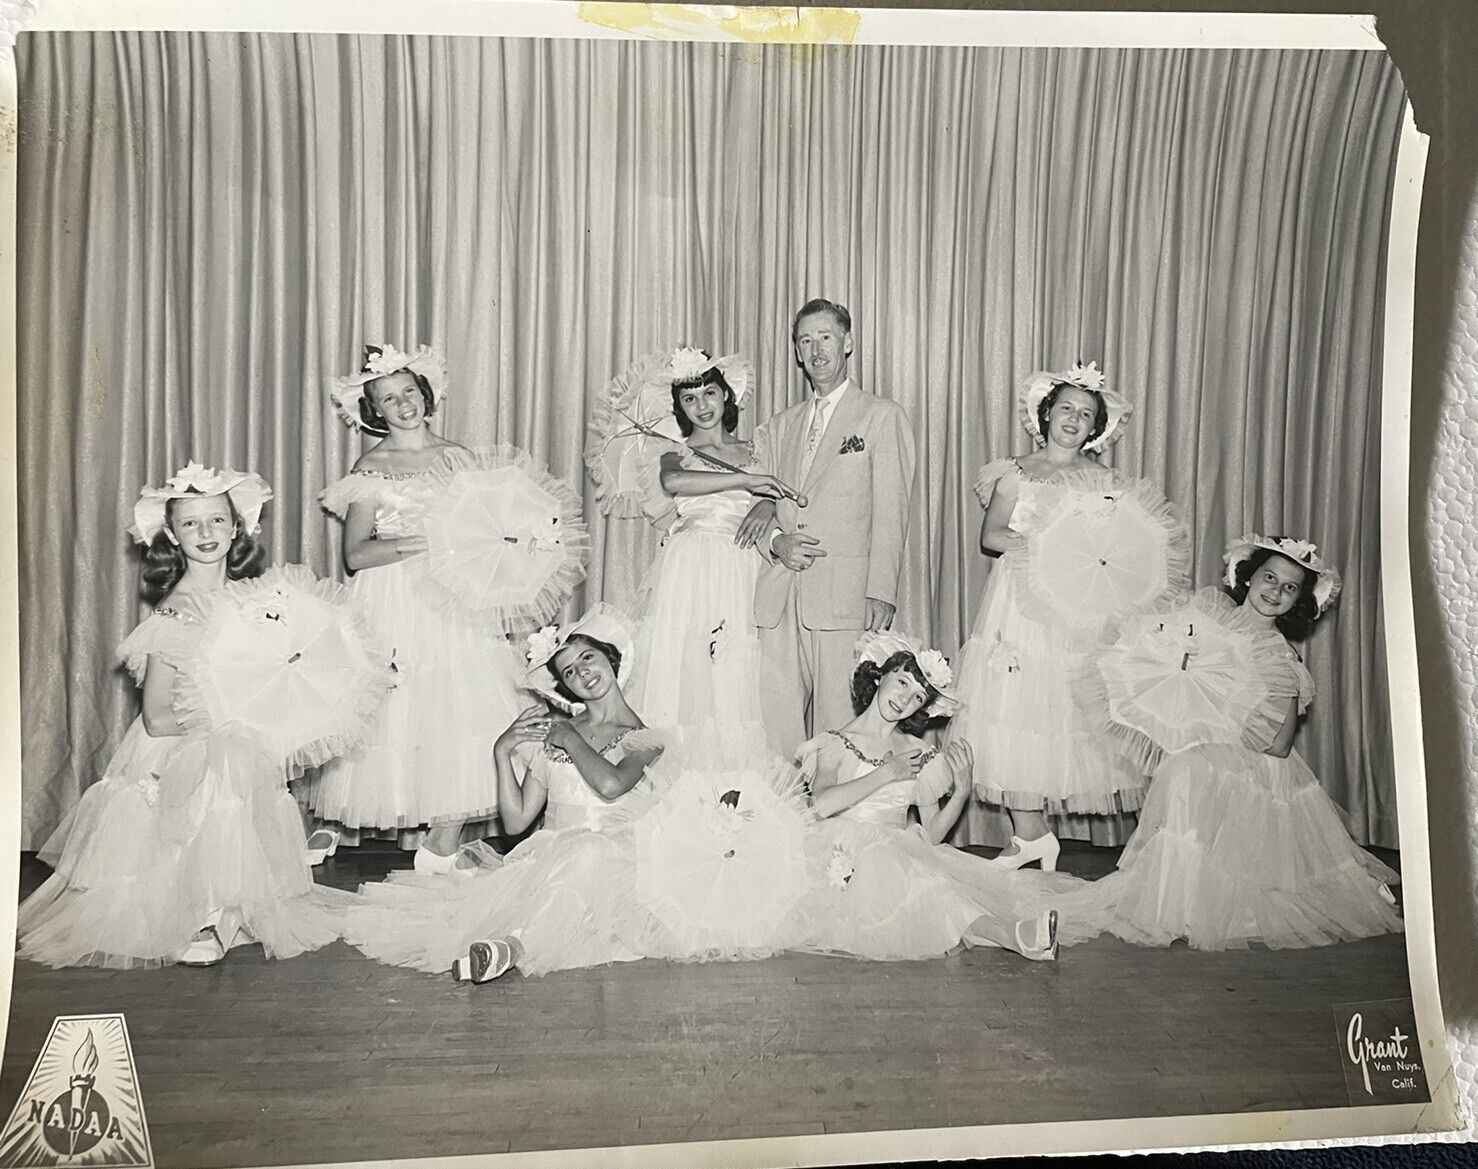 Vintage Girls Dance Photograh NADAA CA Group Photo 8 x 10 Black White Parasols